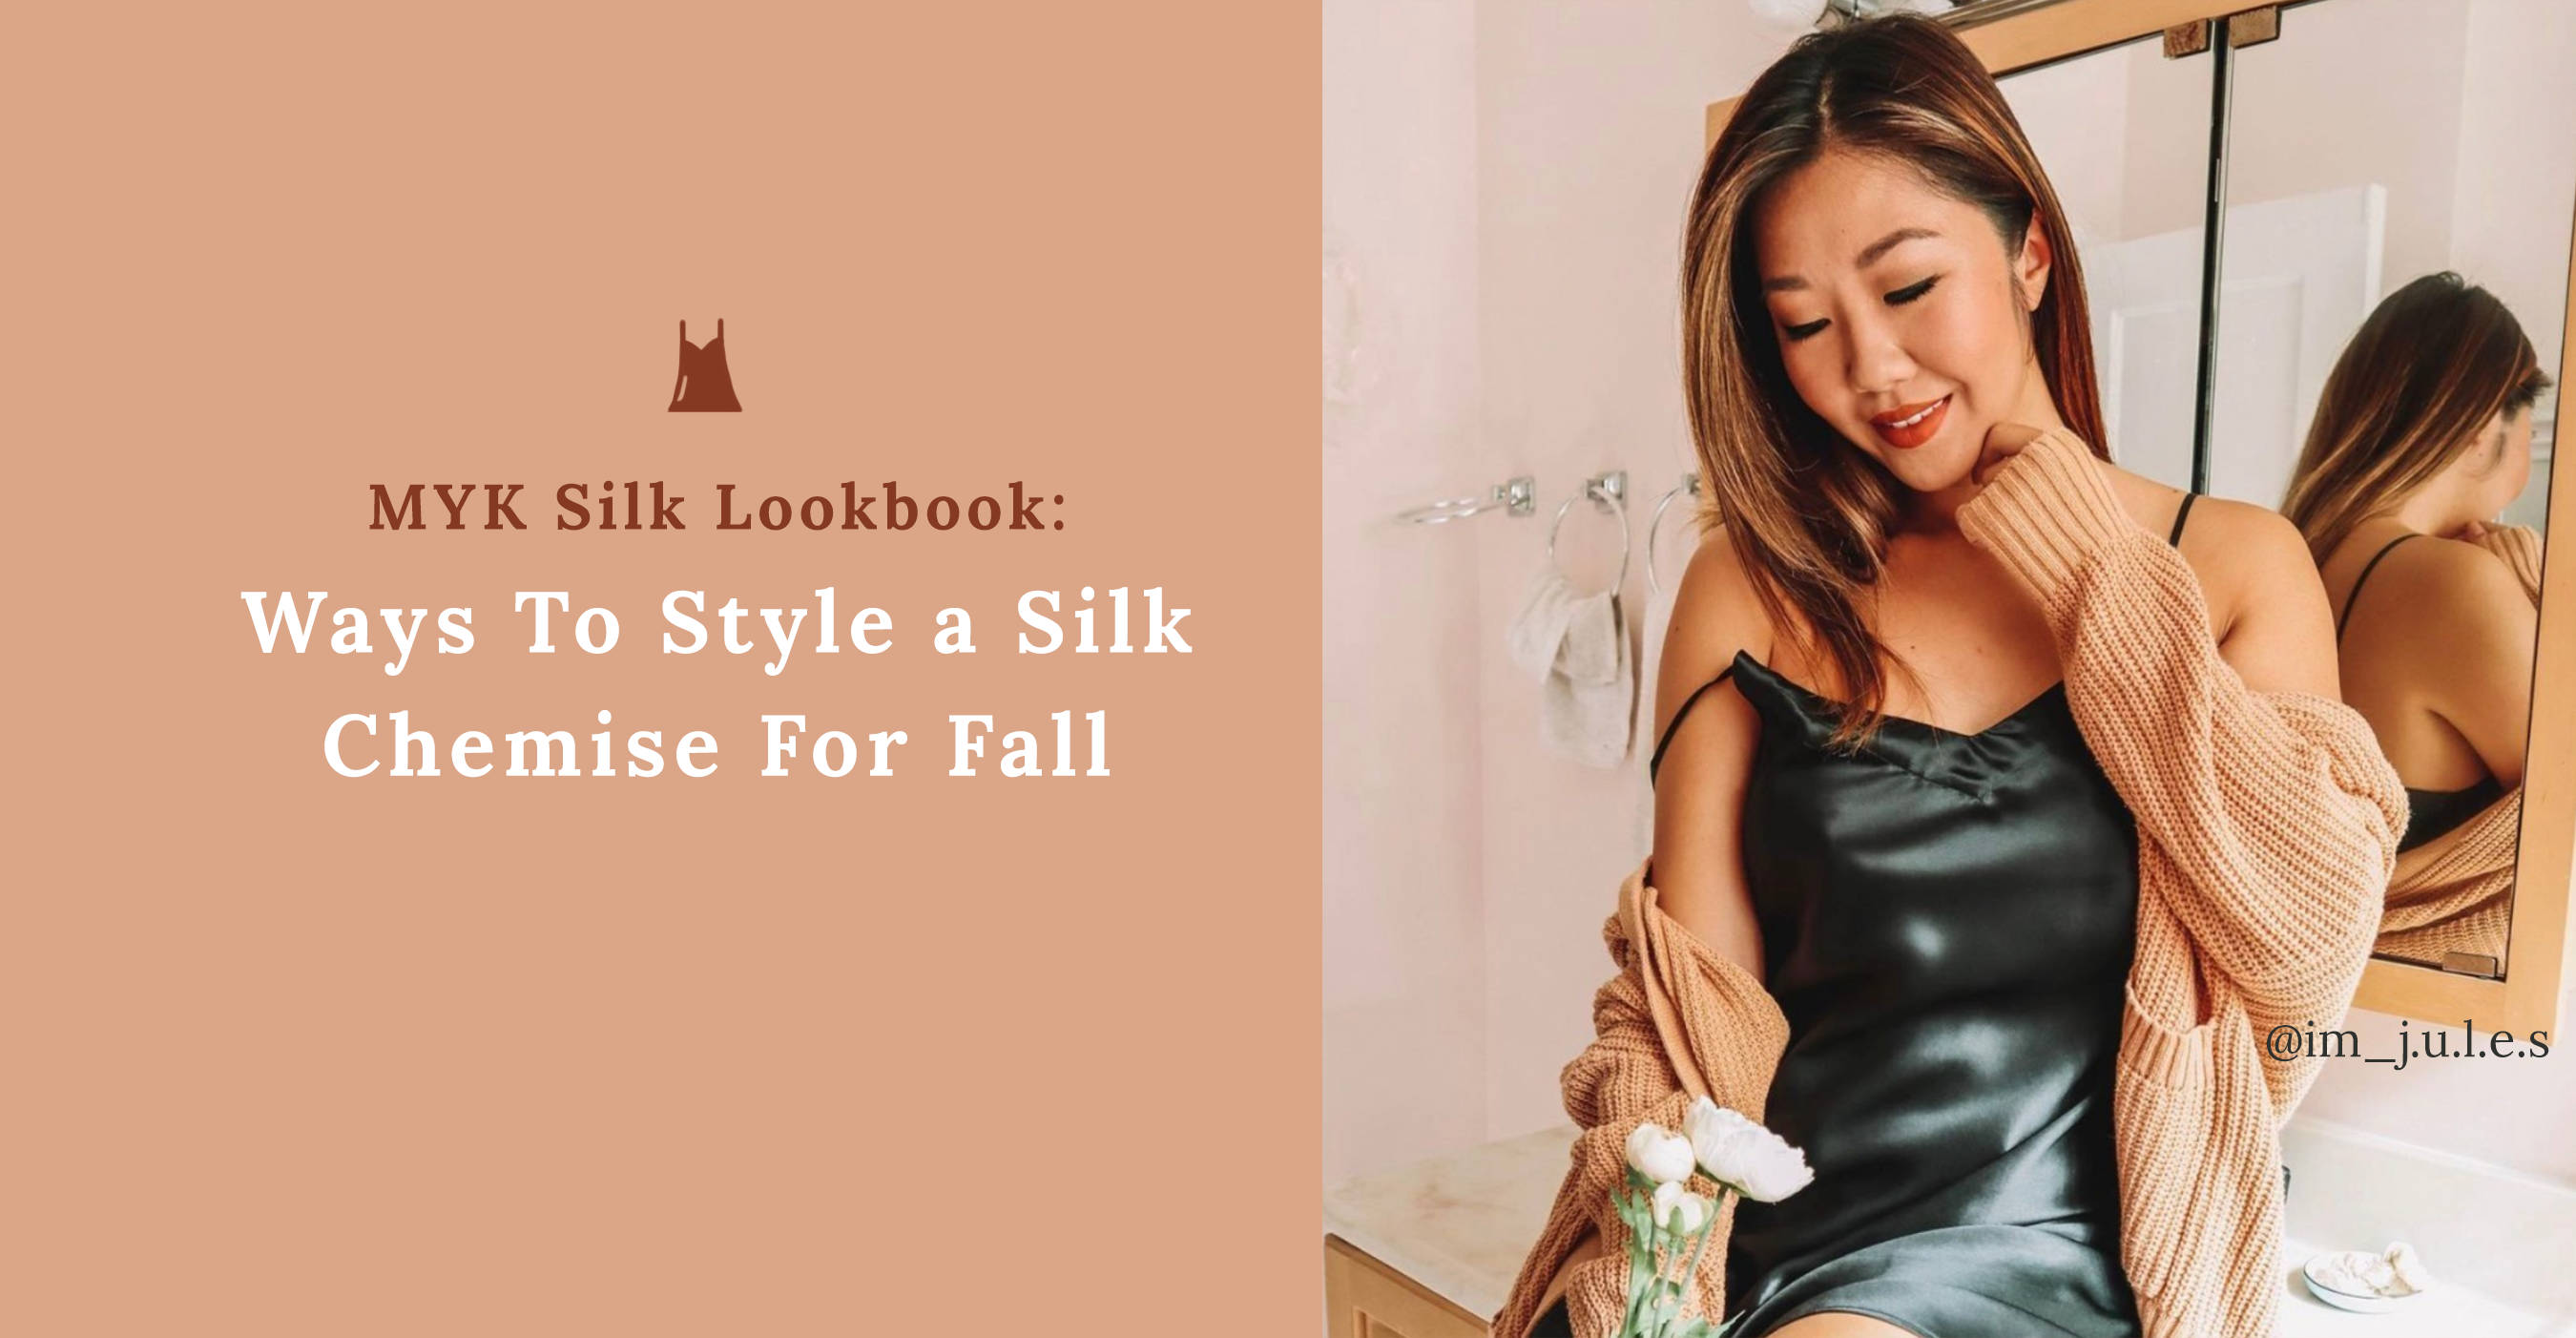 MYK Silk Lookbook: Ways To Style a Silk Chemise For Fall